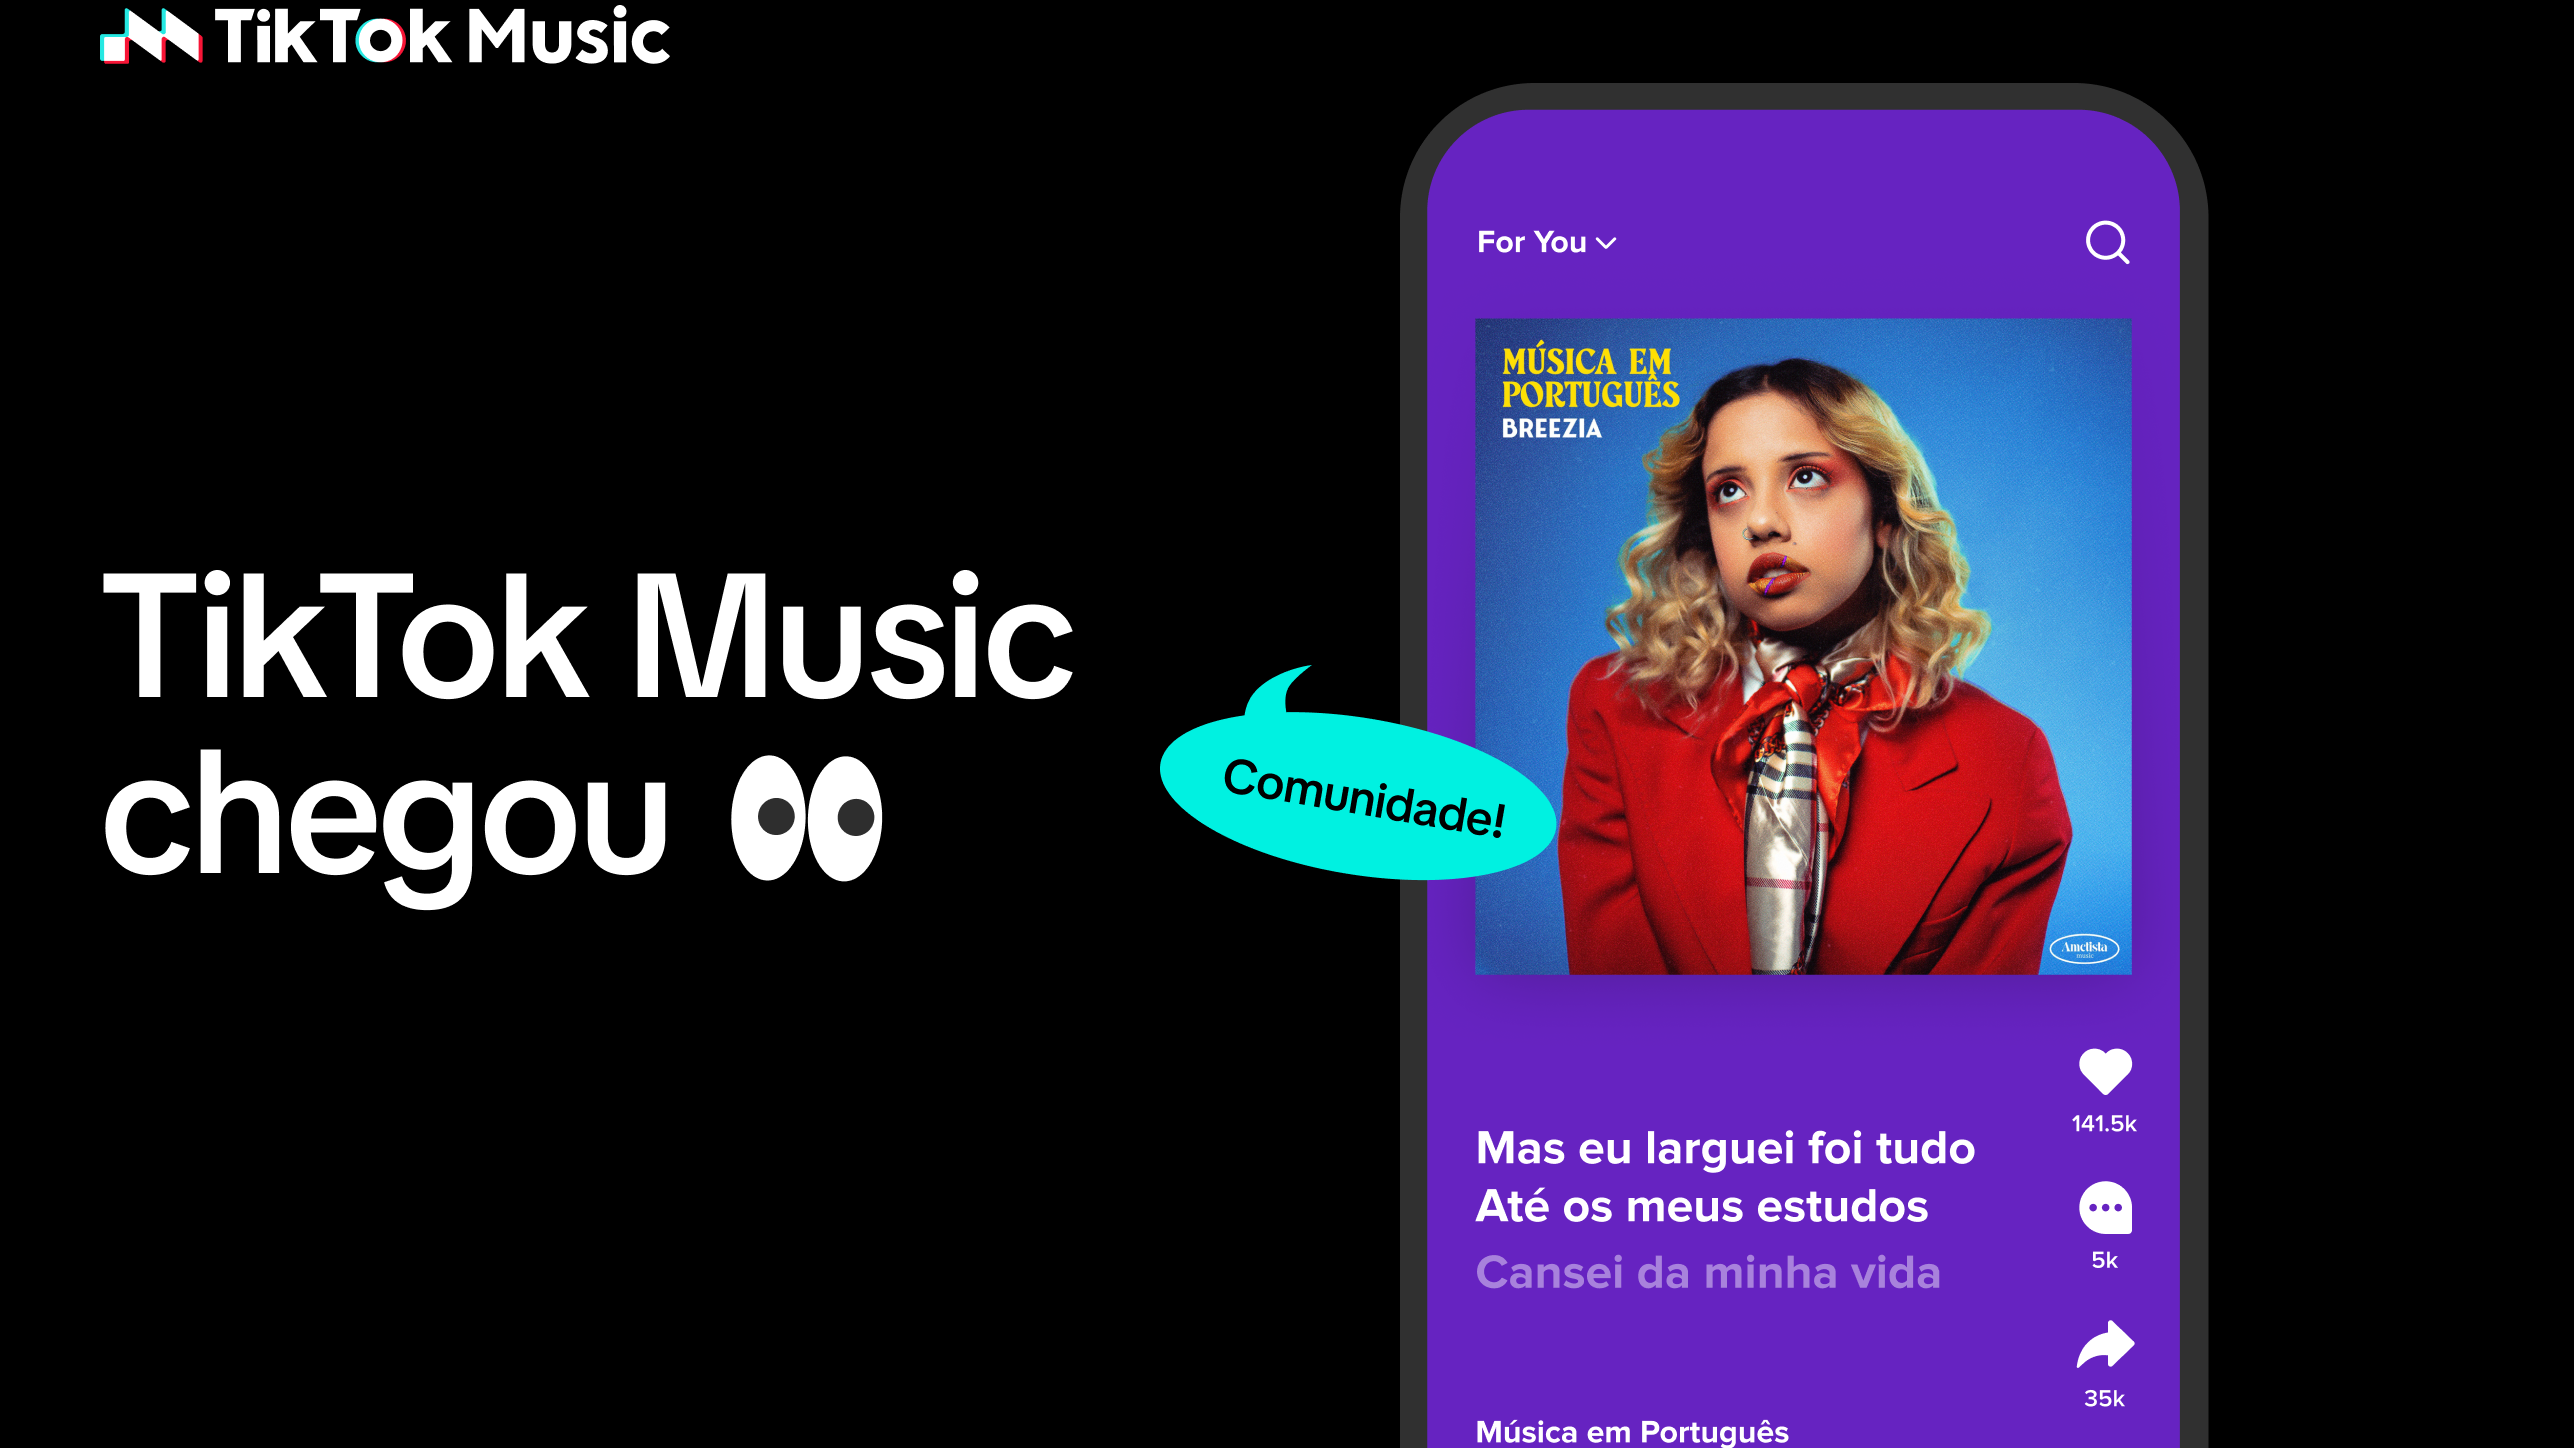 Music e Premium chegam ao Brasil por a partir de R$ 16,90 -  Canaltech